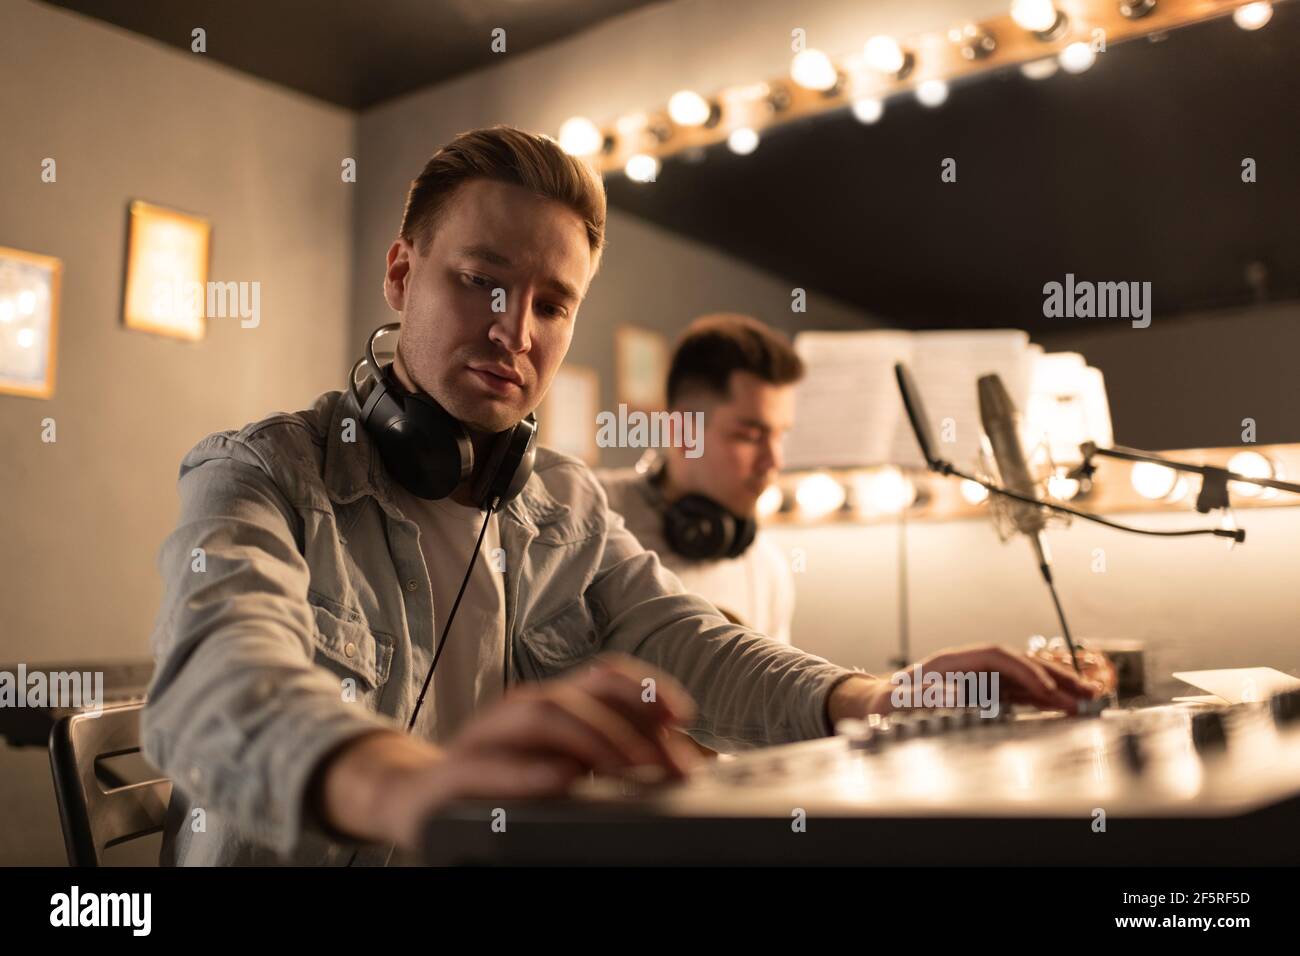 Focused musician using sound board near colleague Stock Photo